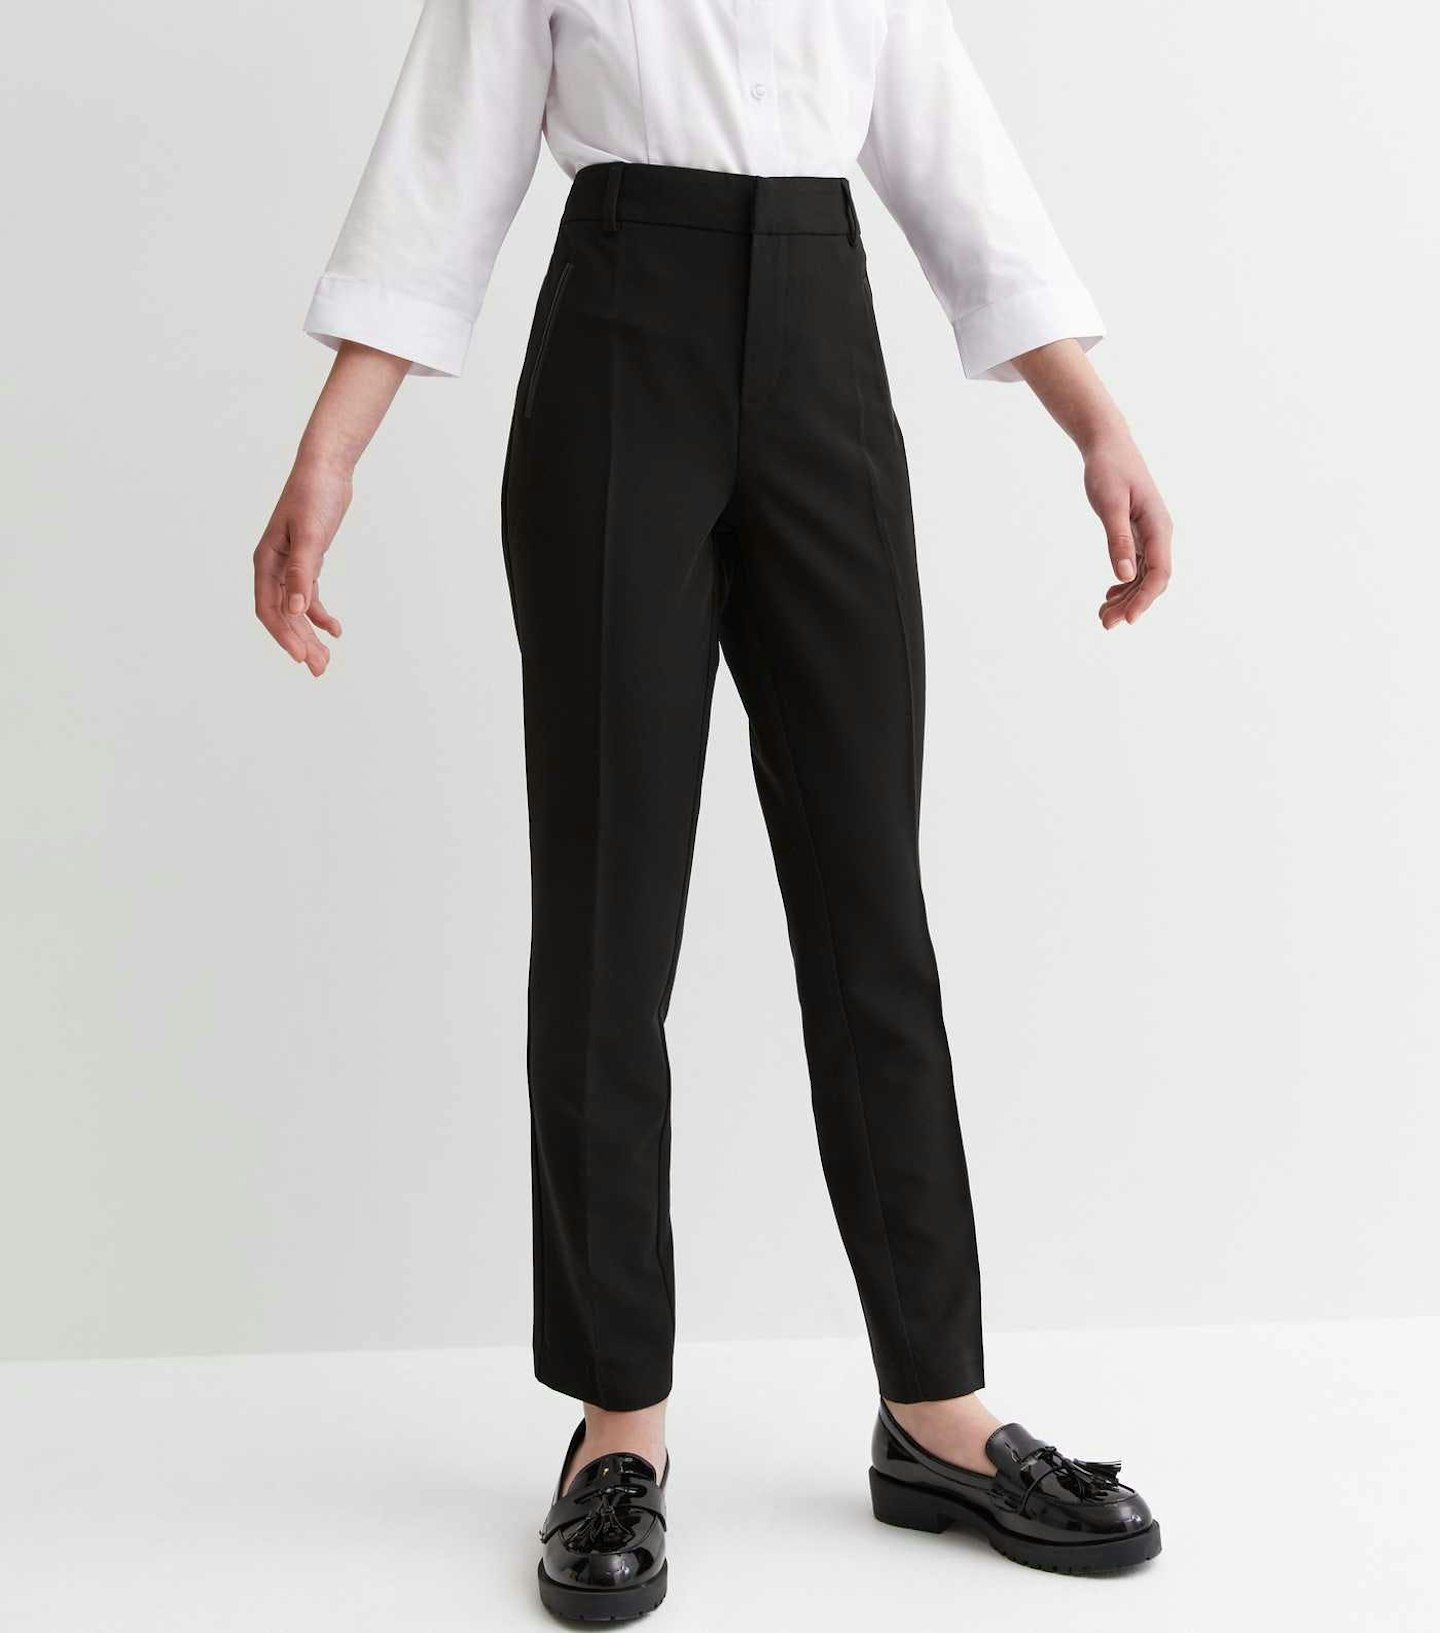 New Look Girls Black Slim Fit Adjustable Waist School Trousers